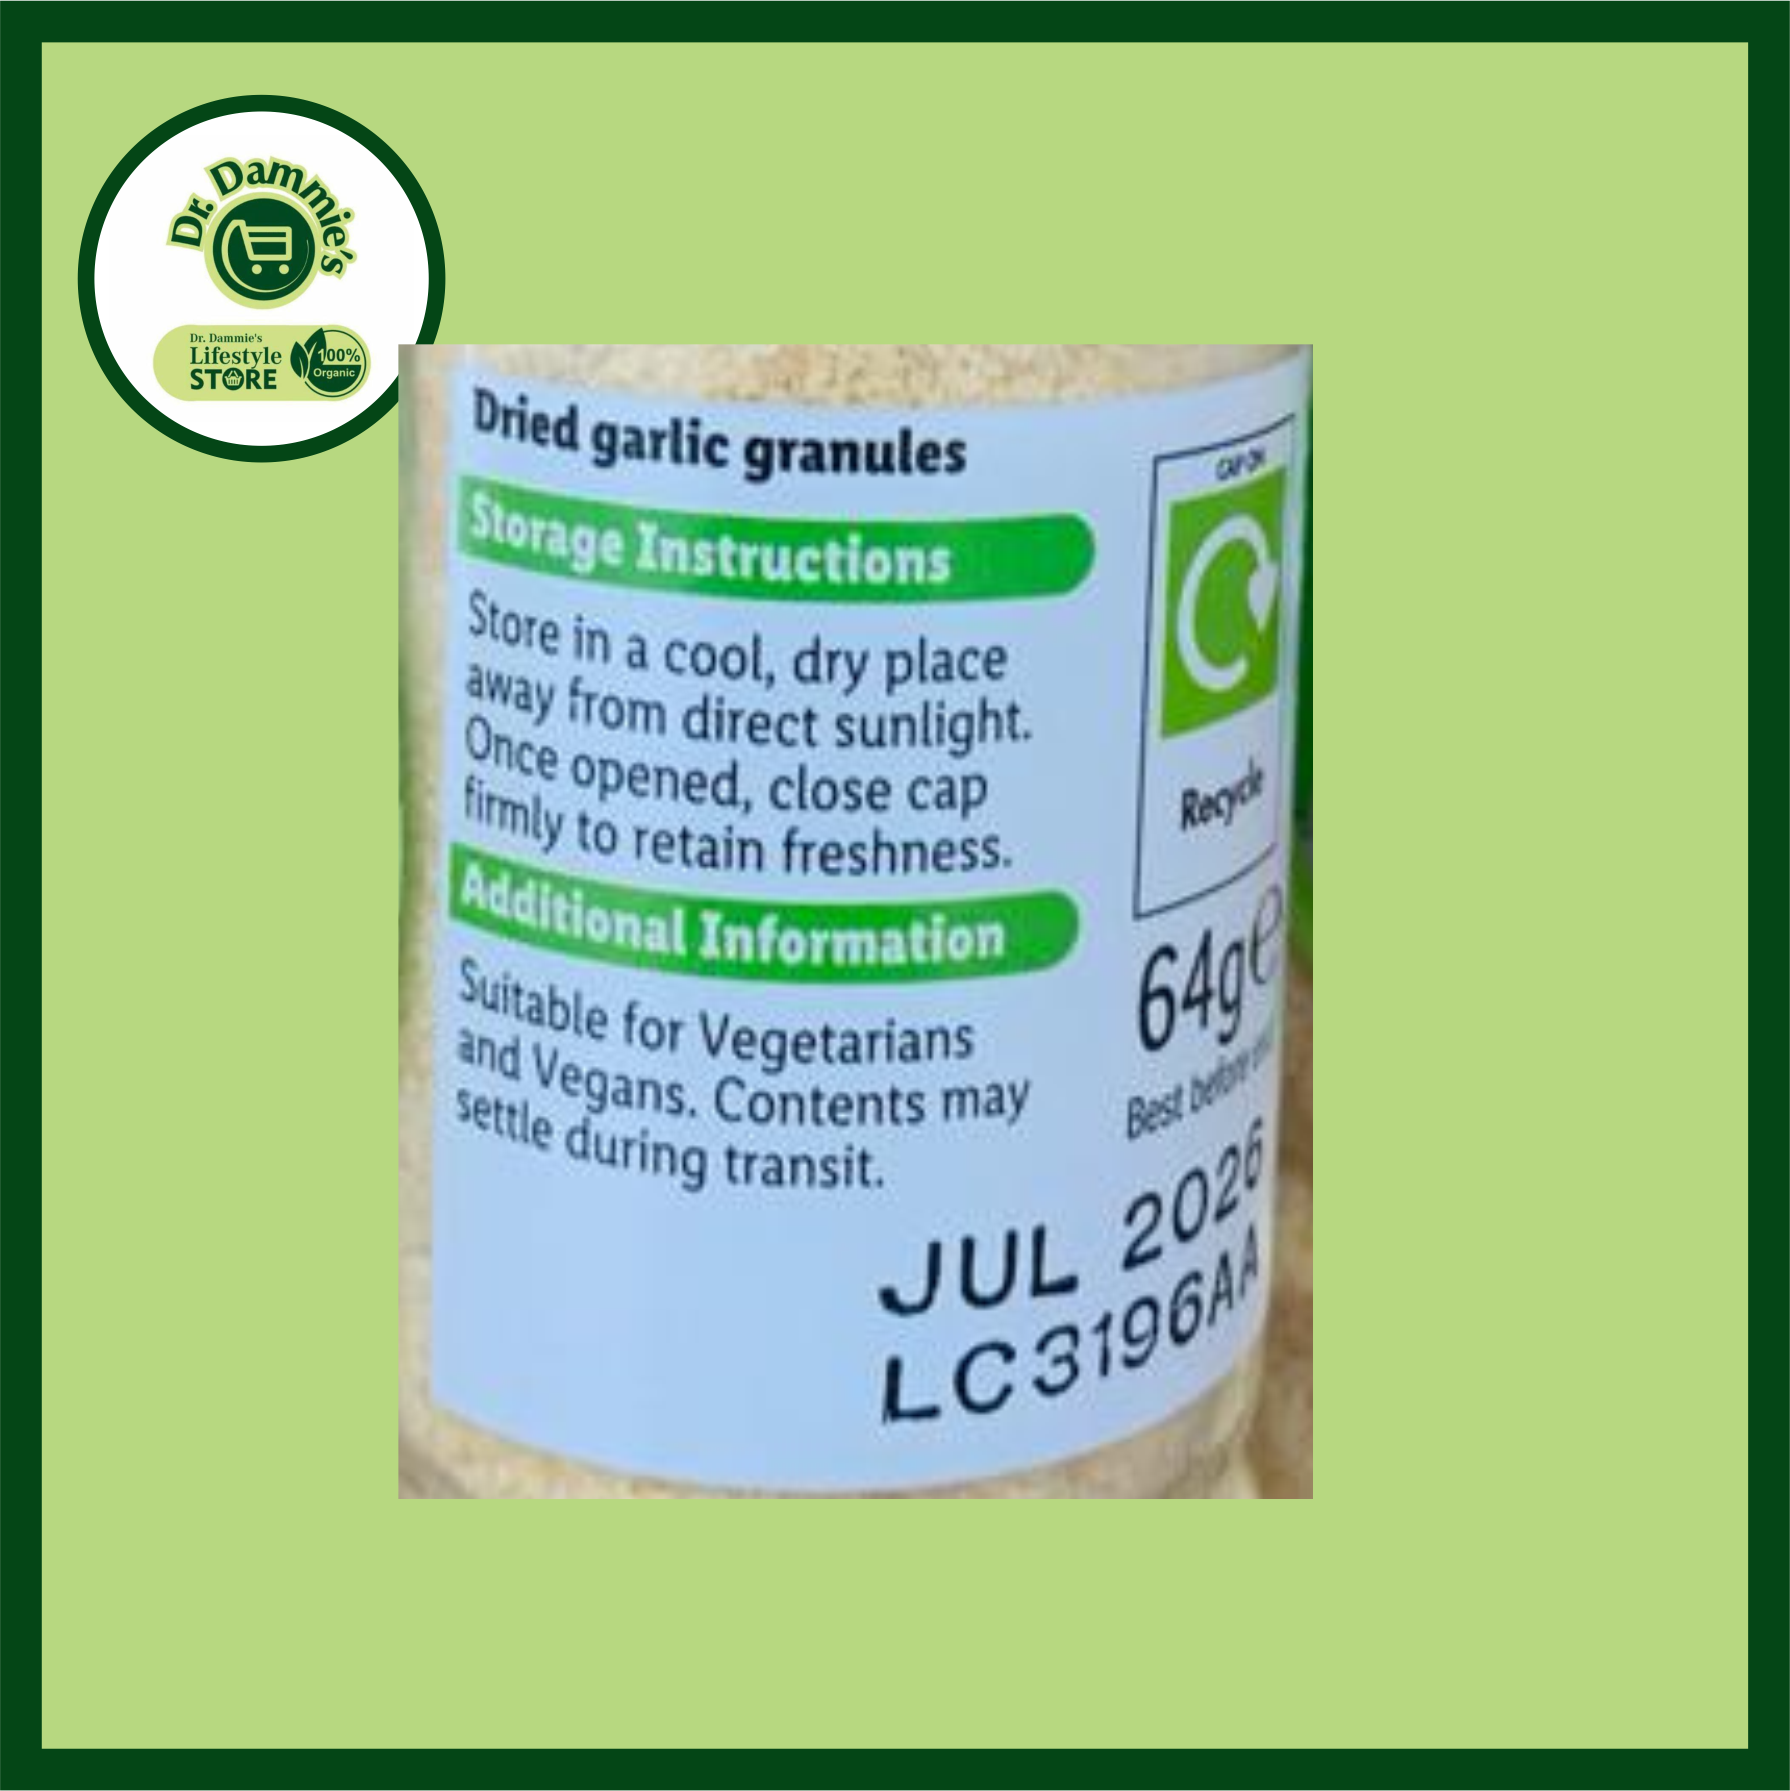 Garlic granules details